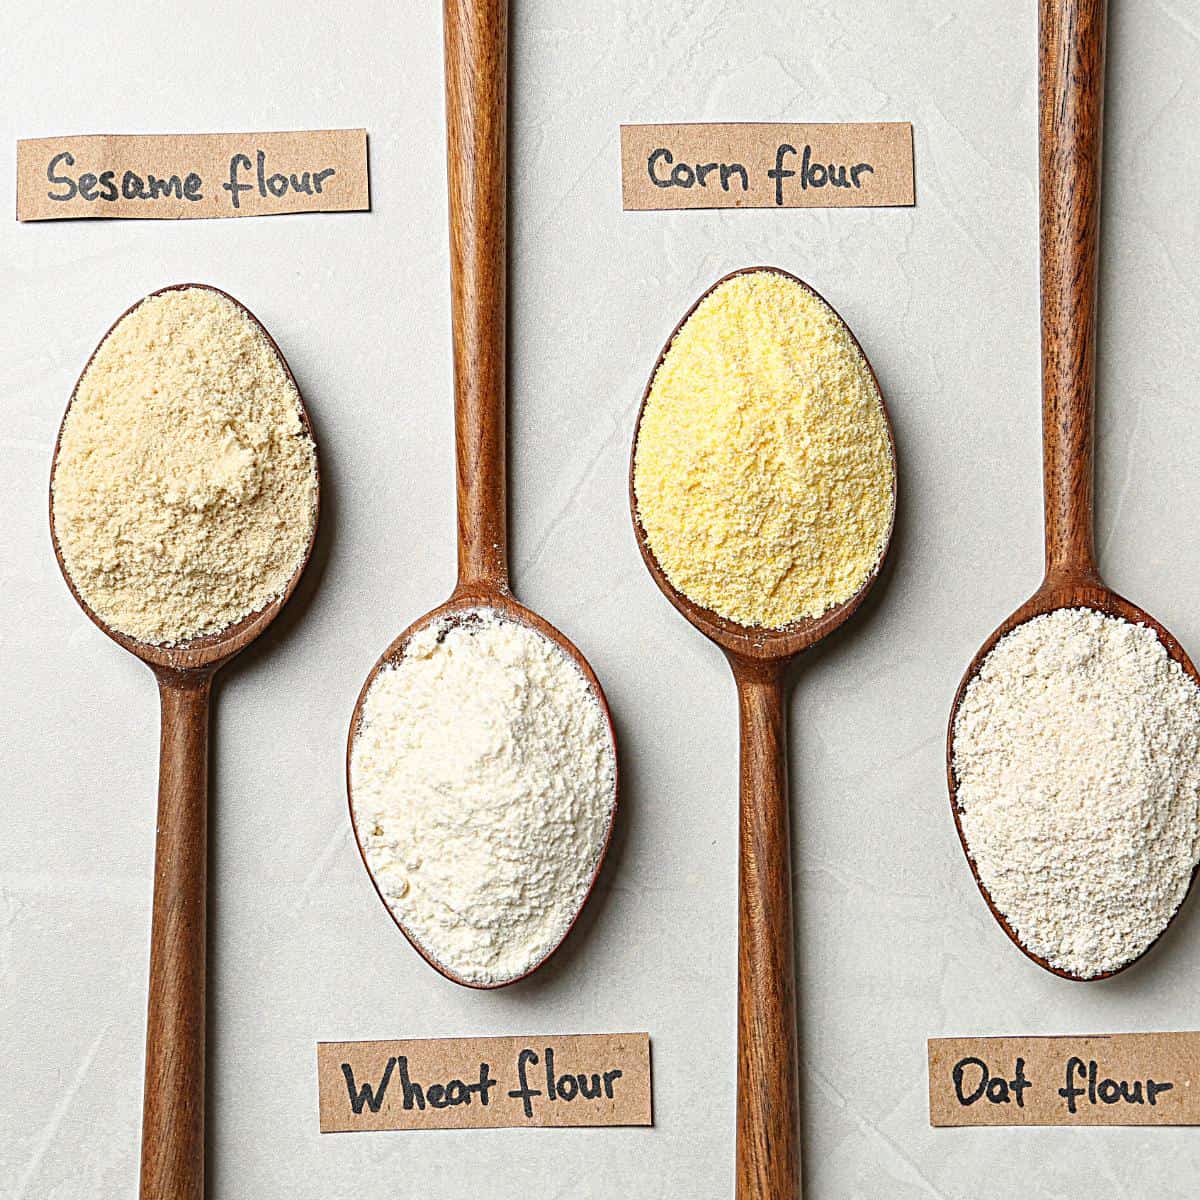 Flour substitutes in spoons.